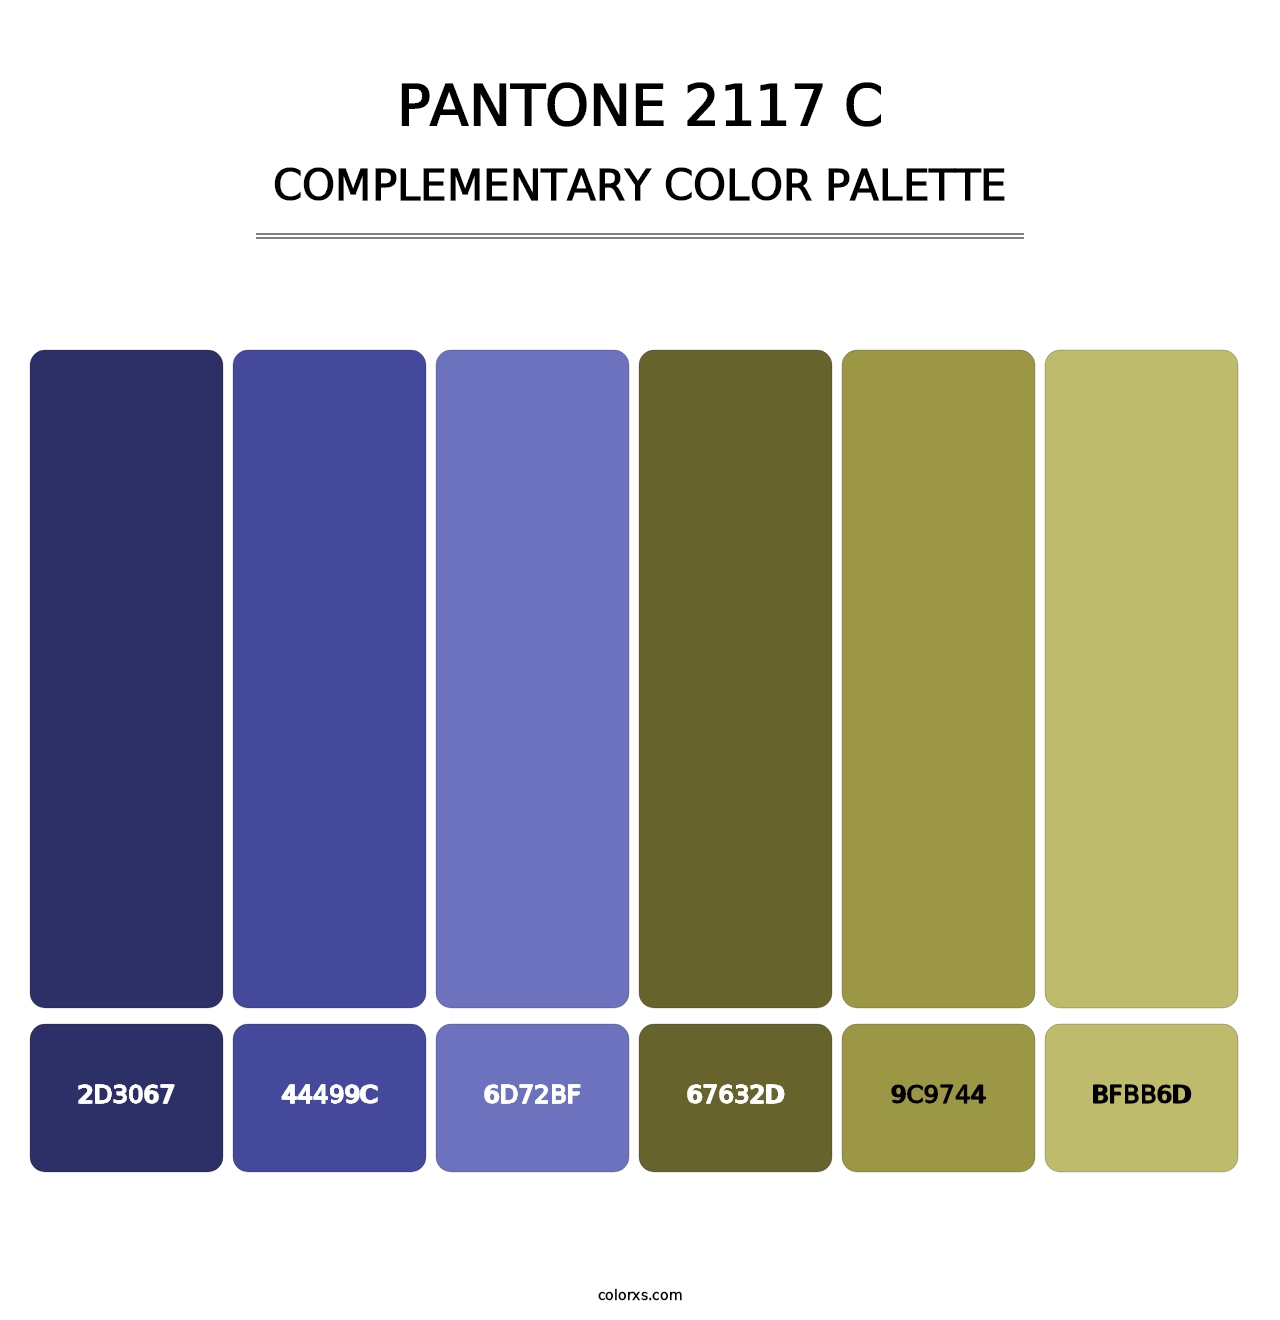 PANTONE 2117 C - Complementary Color Palette